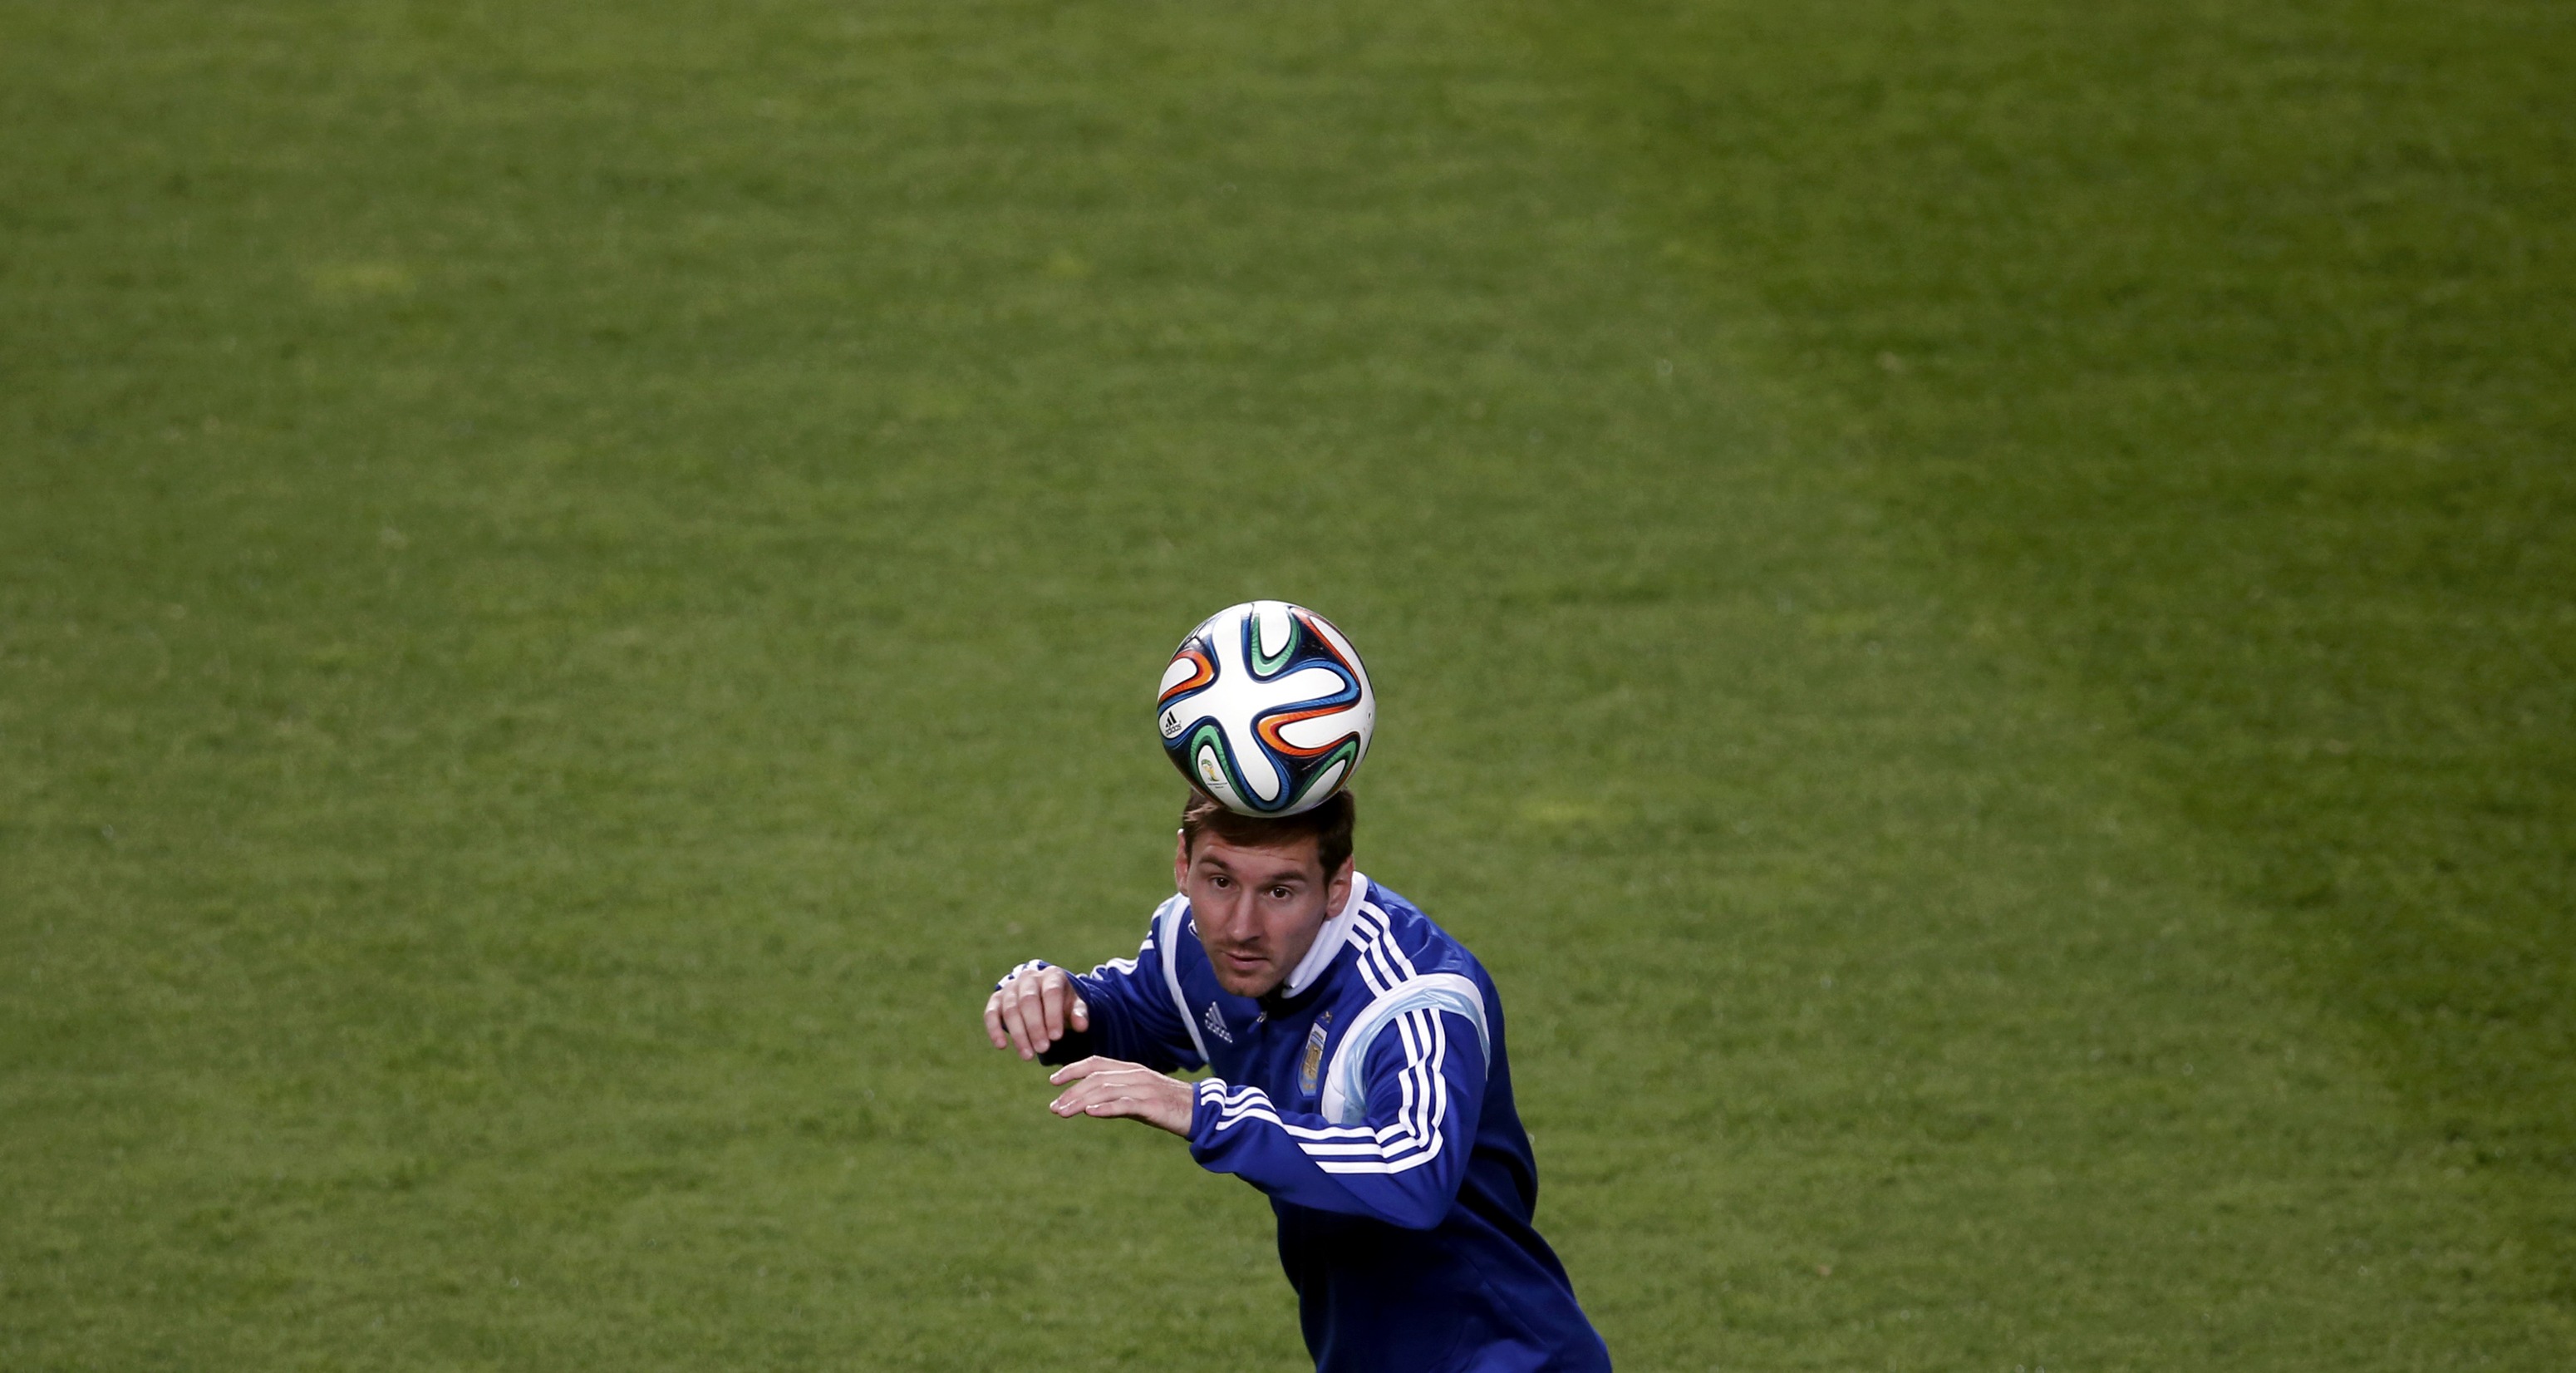 Messi, el líder argentino que va en busca de la corona que le falta